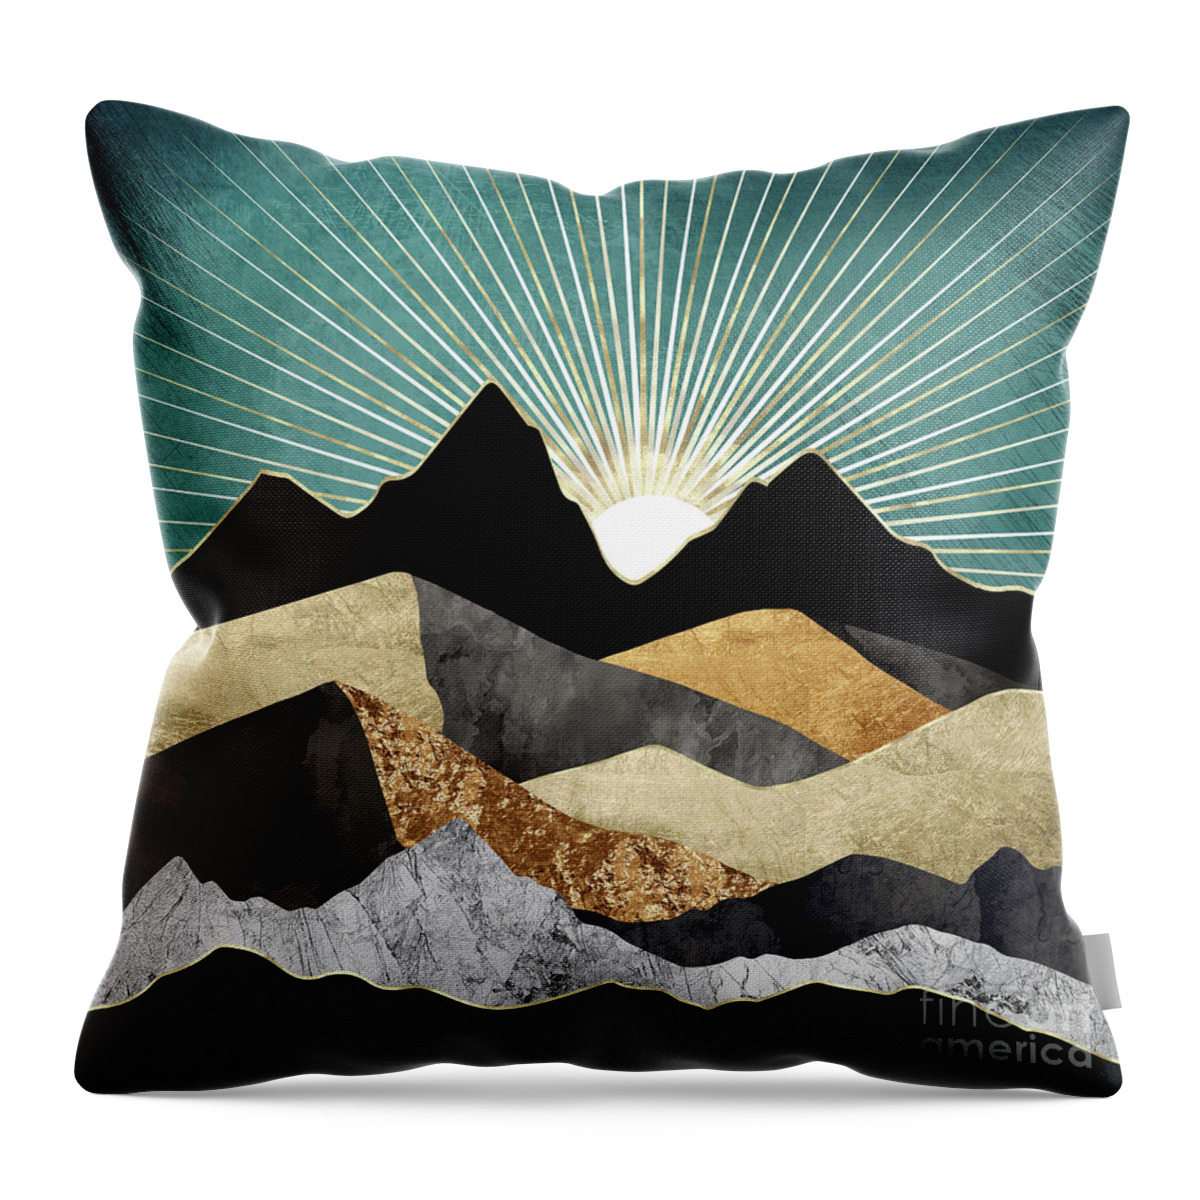 Metallic Throw Pillow featuring the digital art Metallic Daybreak by Spacefrog Designs